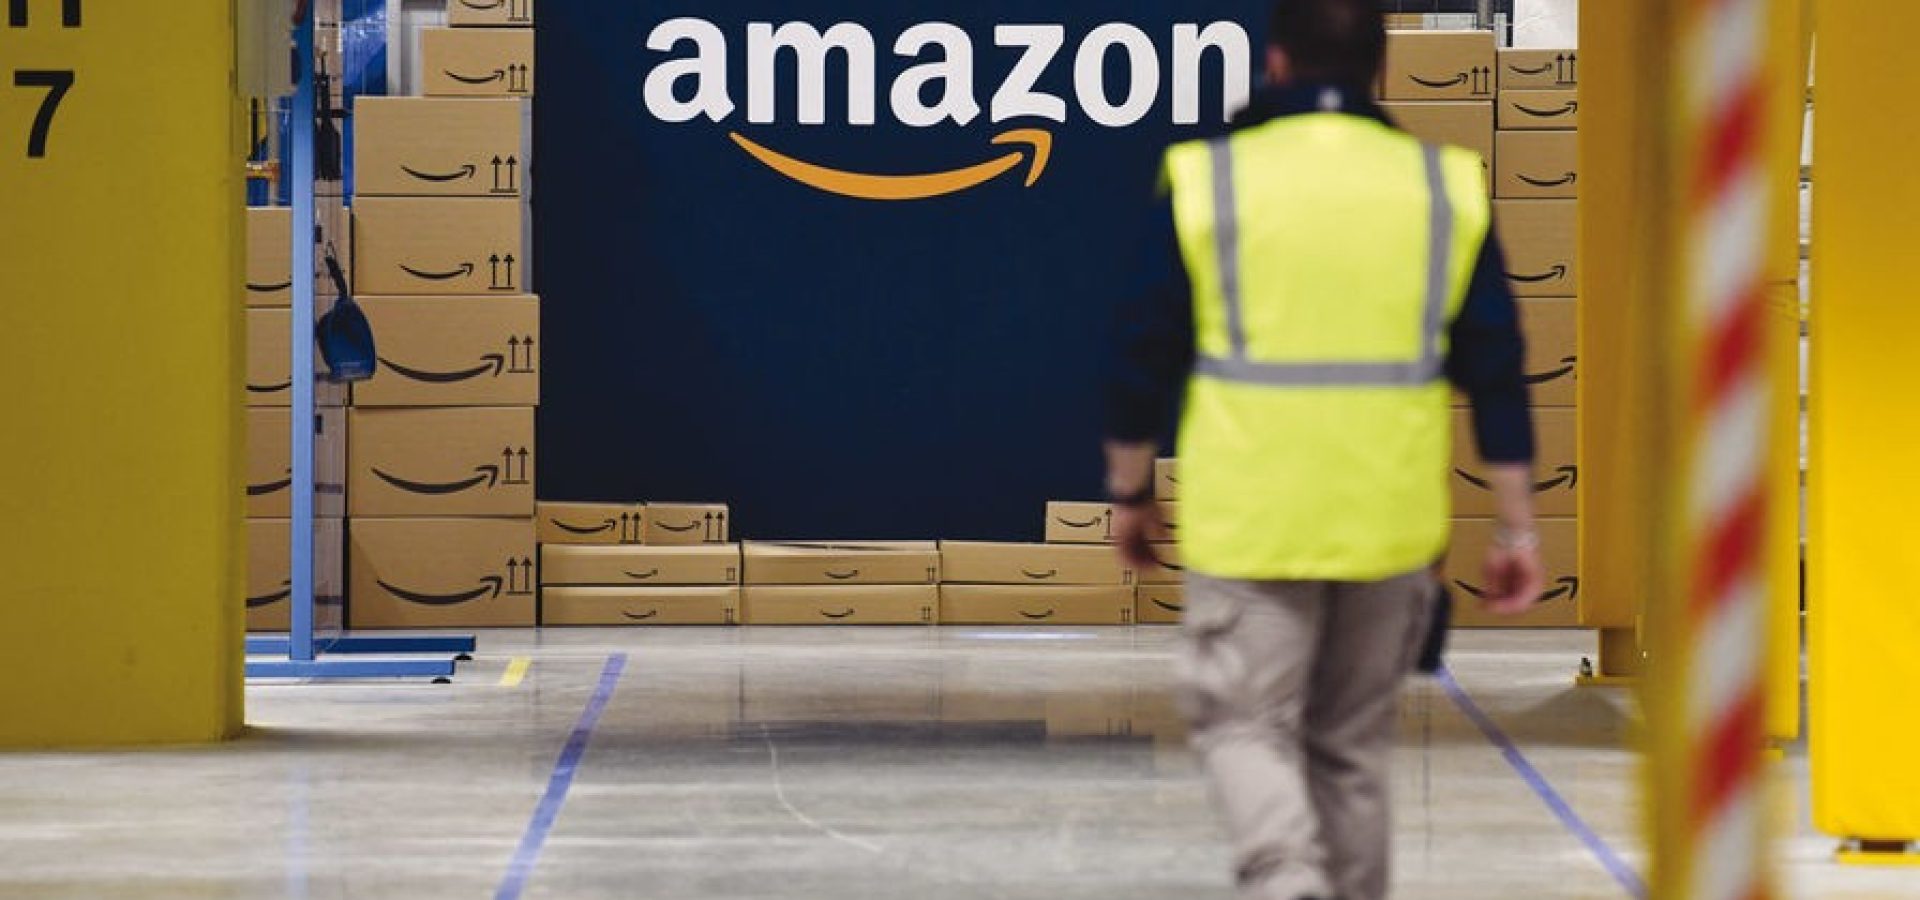 Amazon - a Value Stock Amid Speculative Mania